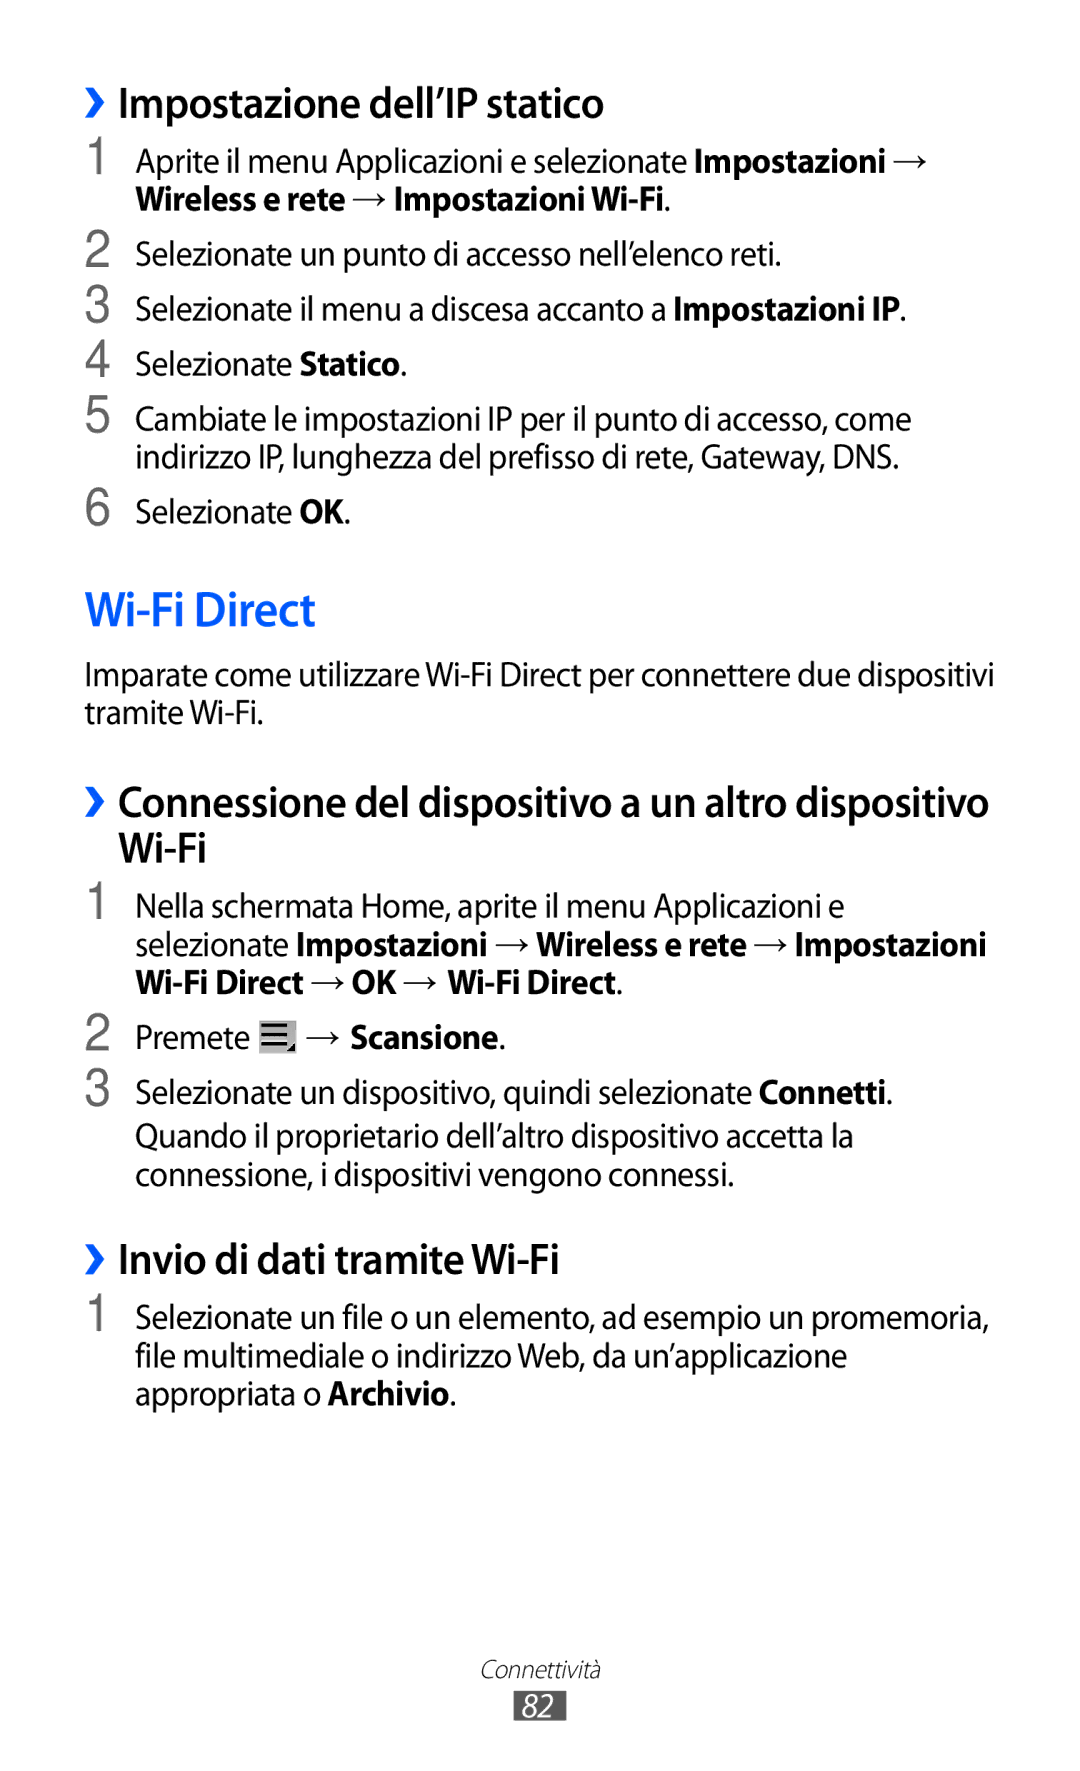 Samsung GT-P7300FKATIM manual Wi-Fi Direct, ››Impostazione dell’IP statico, ››Invio di dati tramite Wi-Fi, → Scansione 